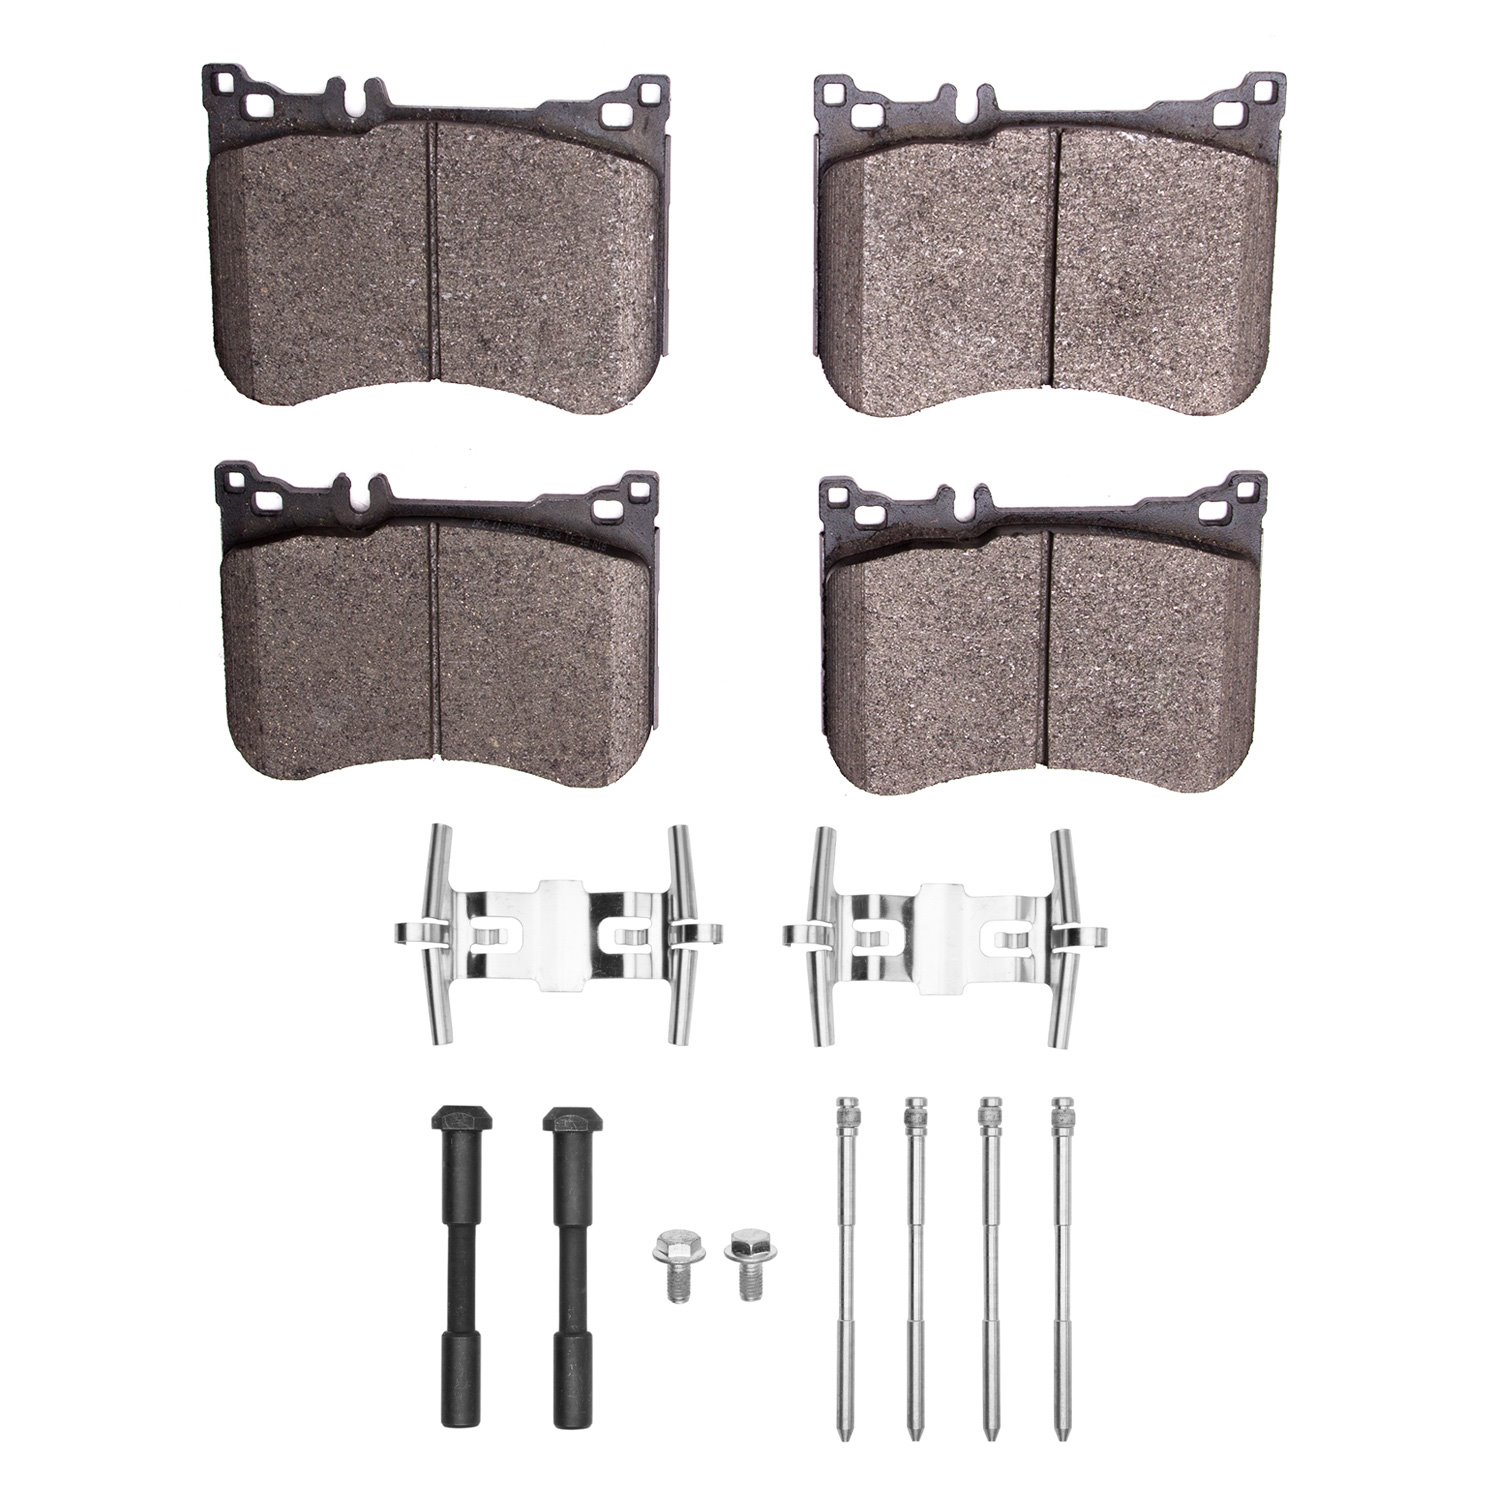 1310-1688-01 3000-Series Ceramic Brake Pads & Hardware Kit, Fits Select Mercedes-Benz, Position: Front